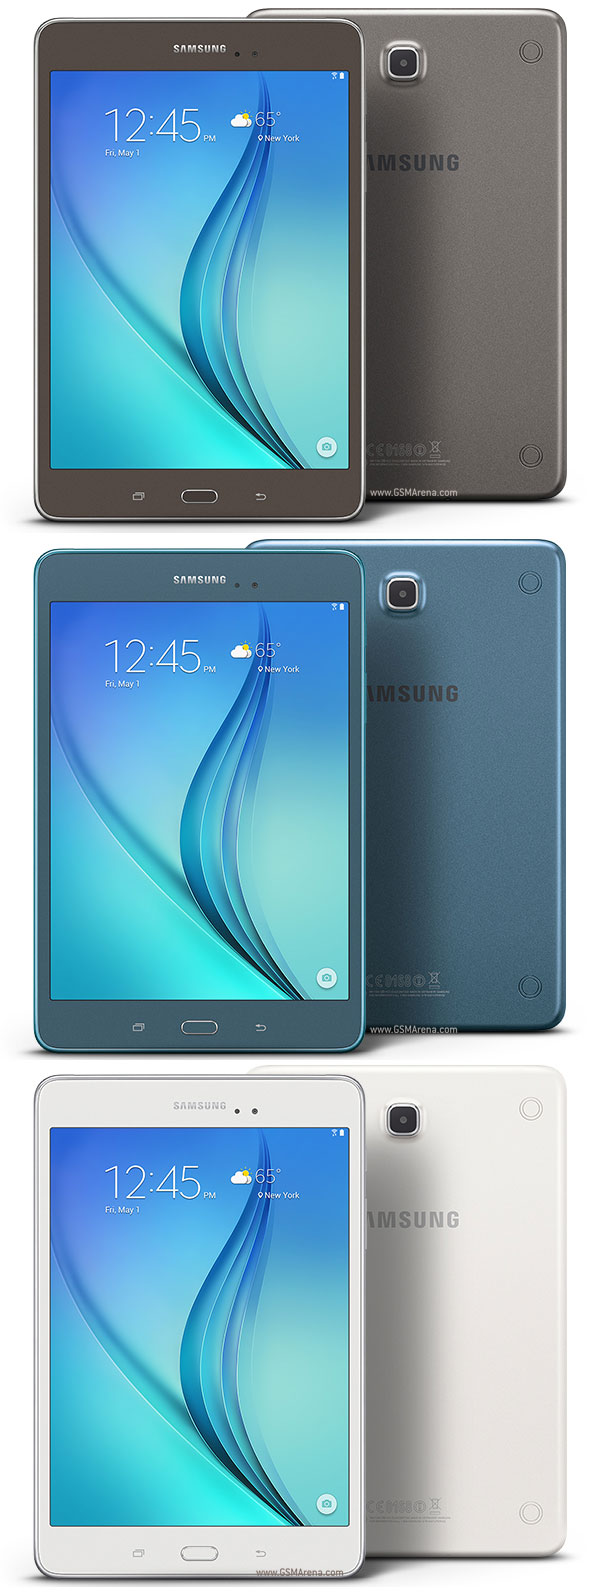 Samsung Galaxy Tab A 8.0 (2015) Tech Specifications